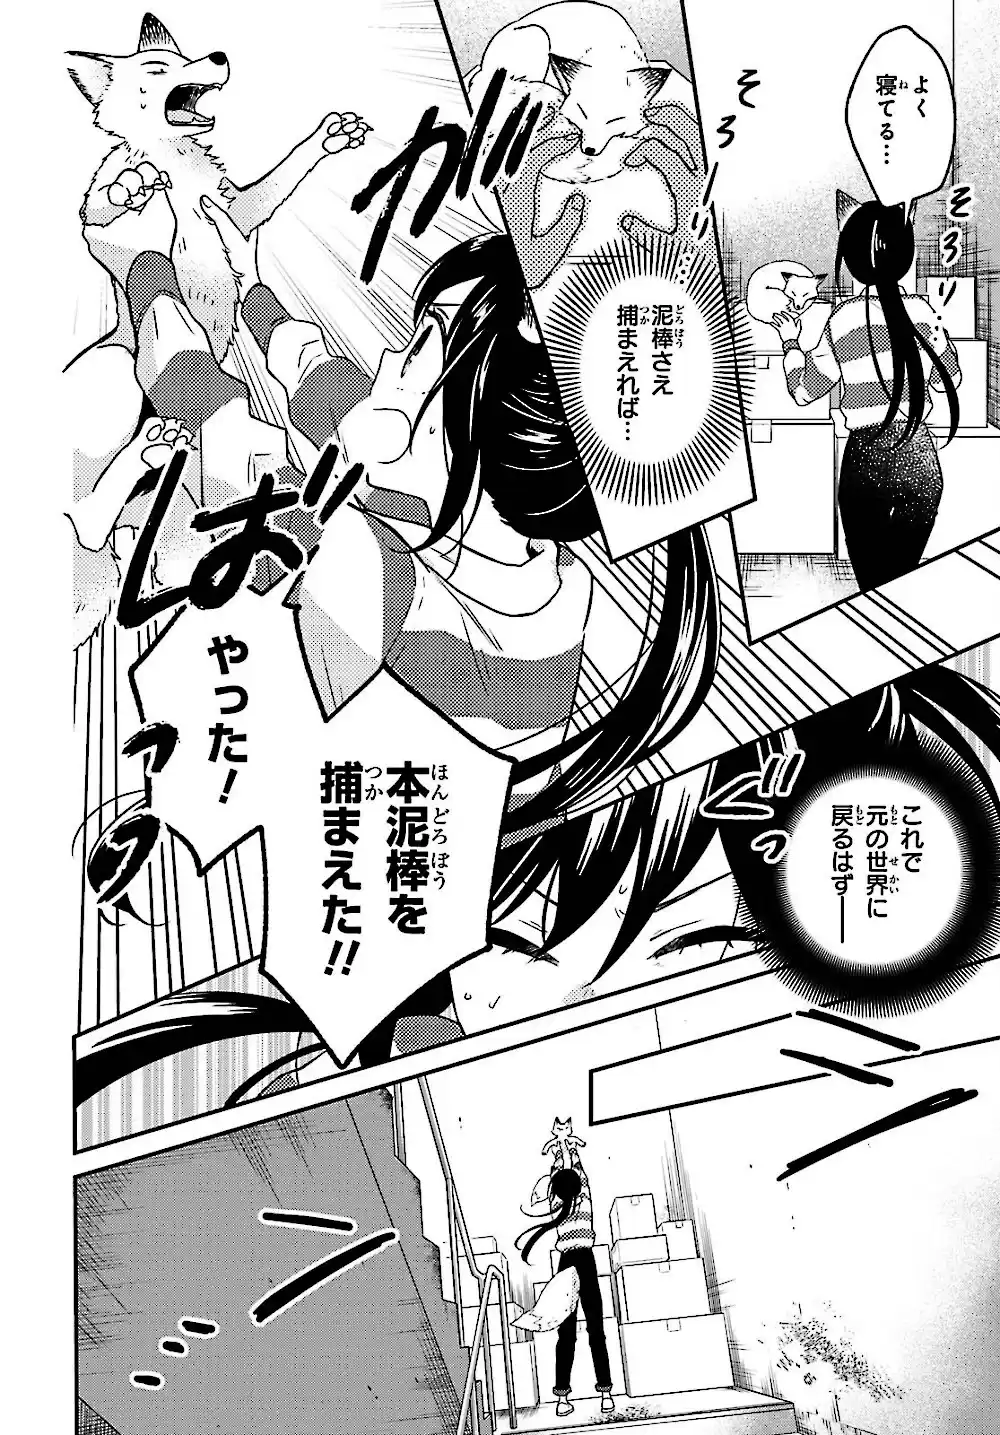 13 Manga E6is